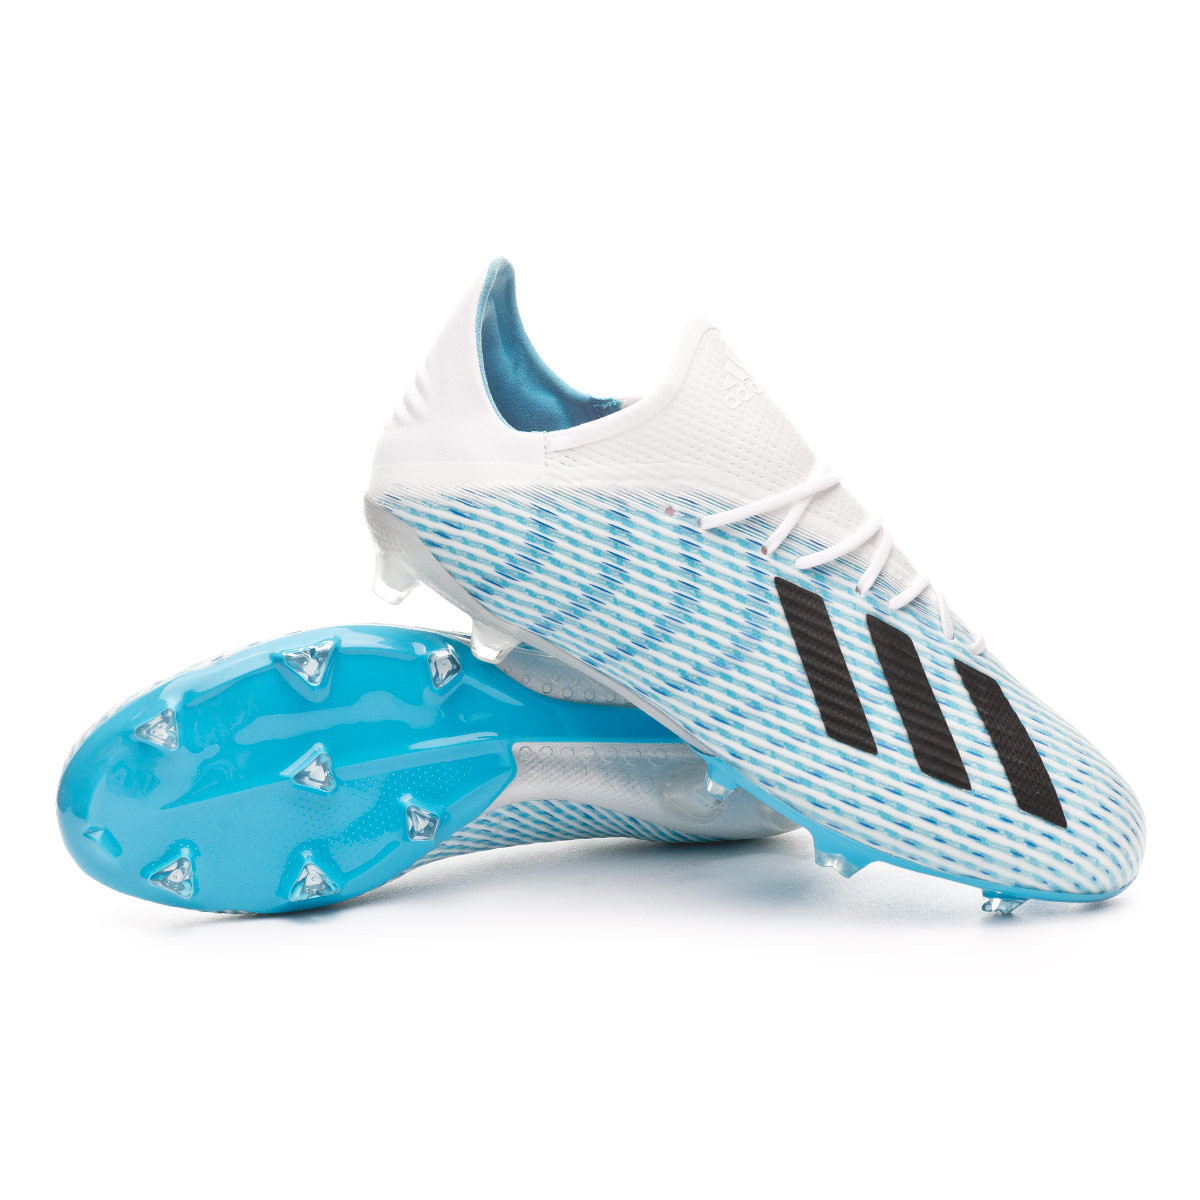 Football Boots adidas X 19.2 FG Bright cyan-Core black-Shock pink -  Football store Fútbol Emotion